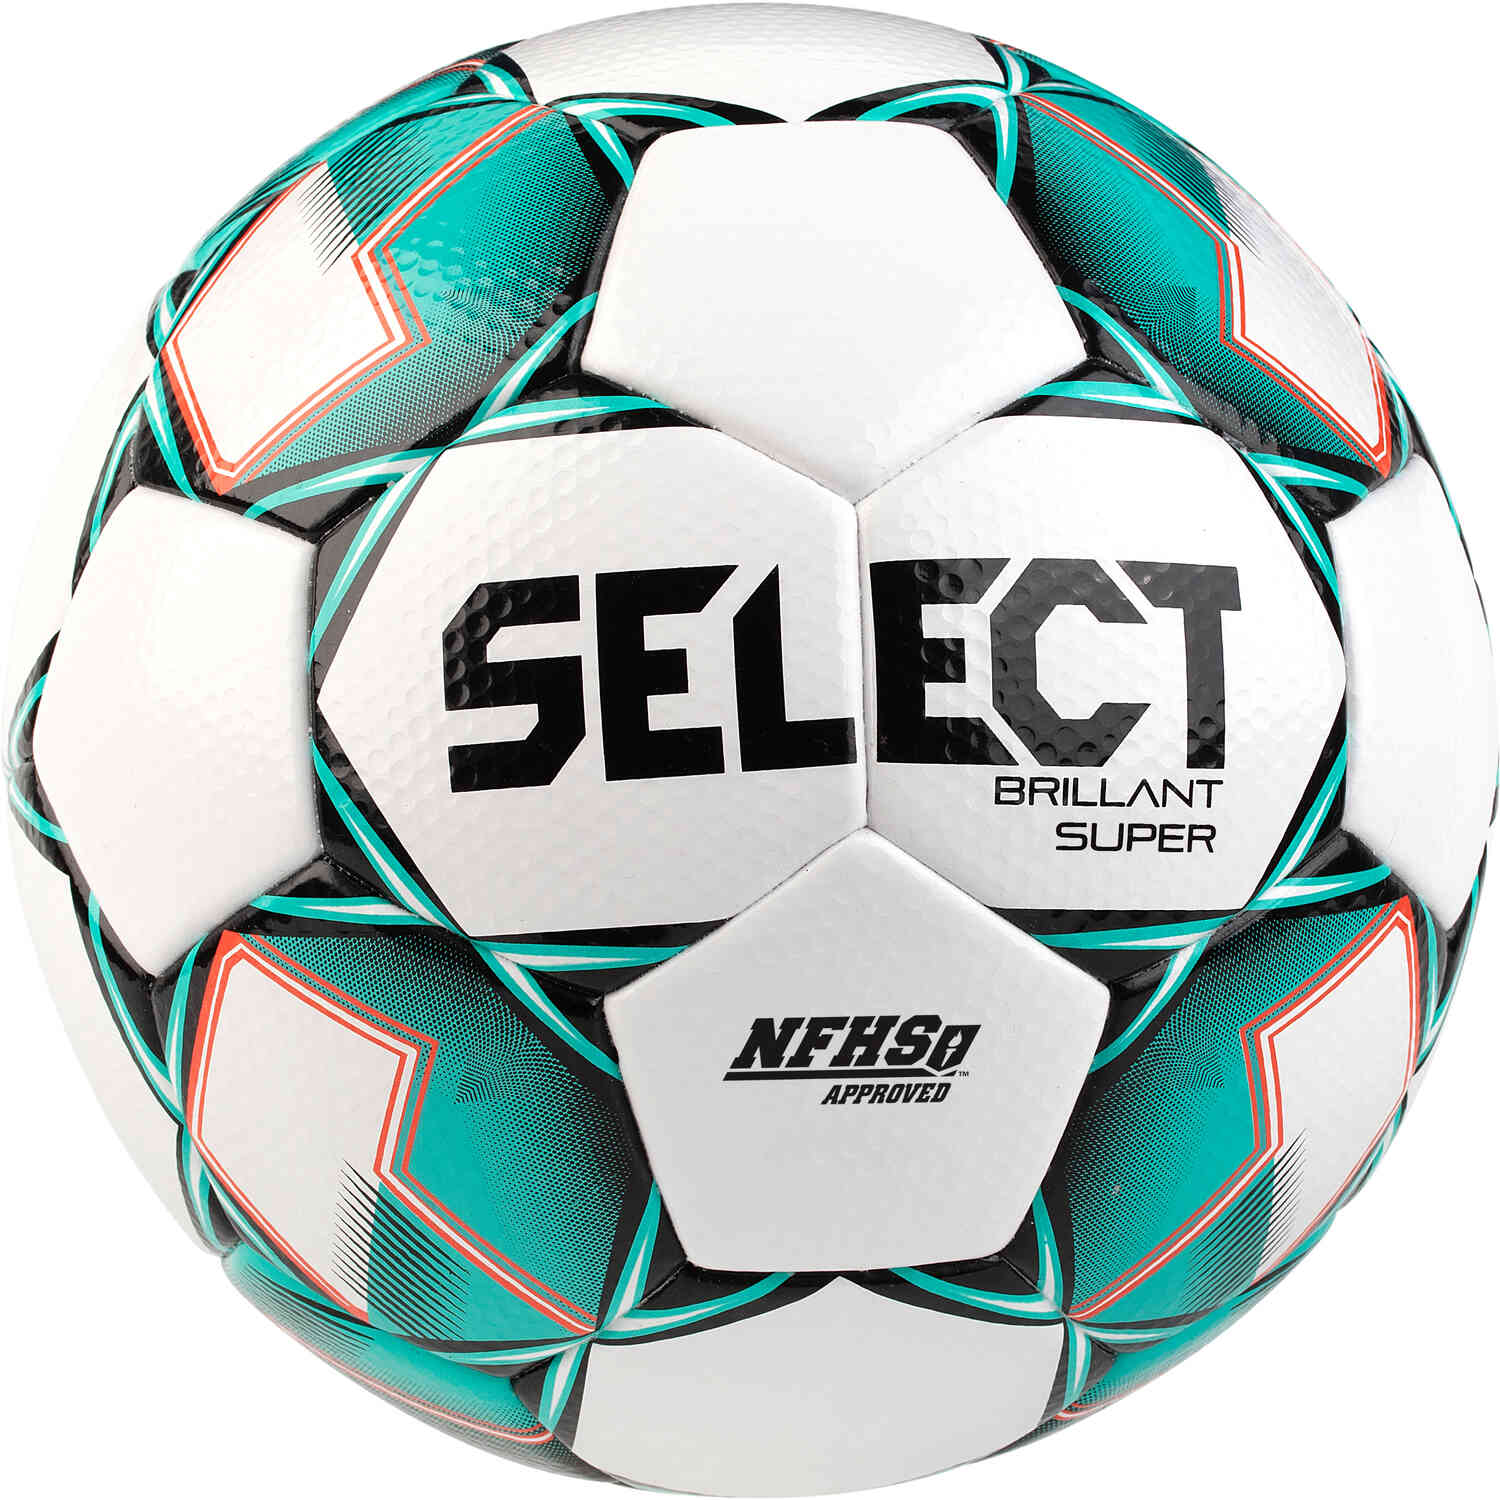 Select Nfhs Brillant Super Premium Match Soccer Ball White Green Soccerpro